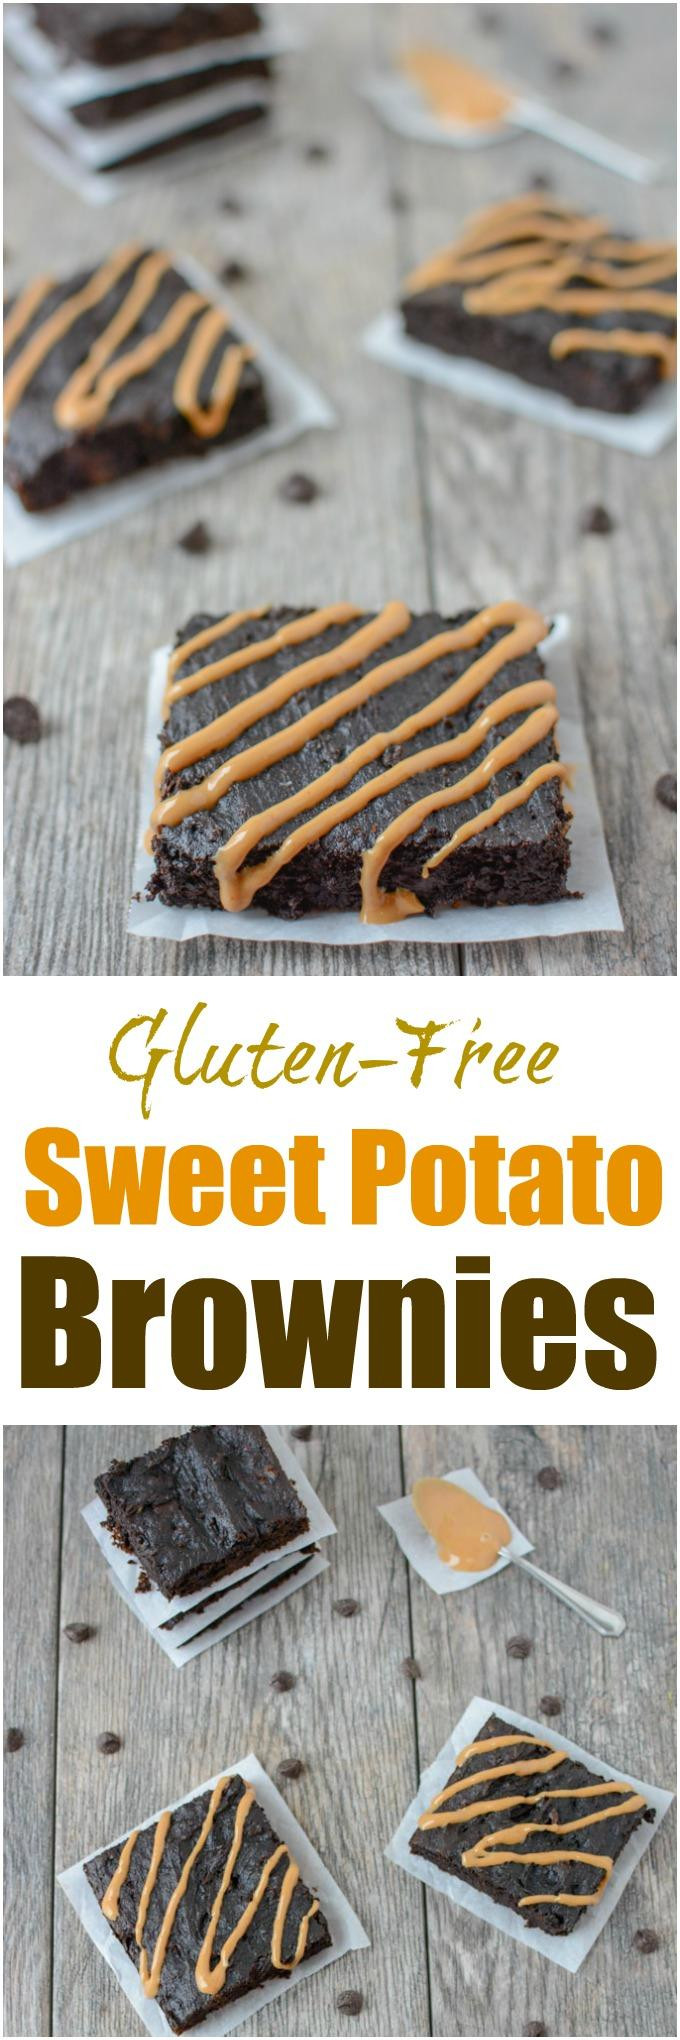 Sweet Potato Brownies Gluten Free
 Gluten Free Sweet Potato Brownies